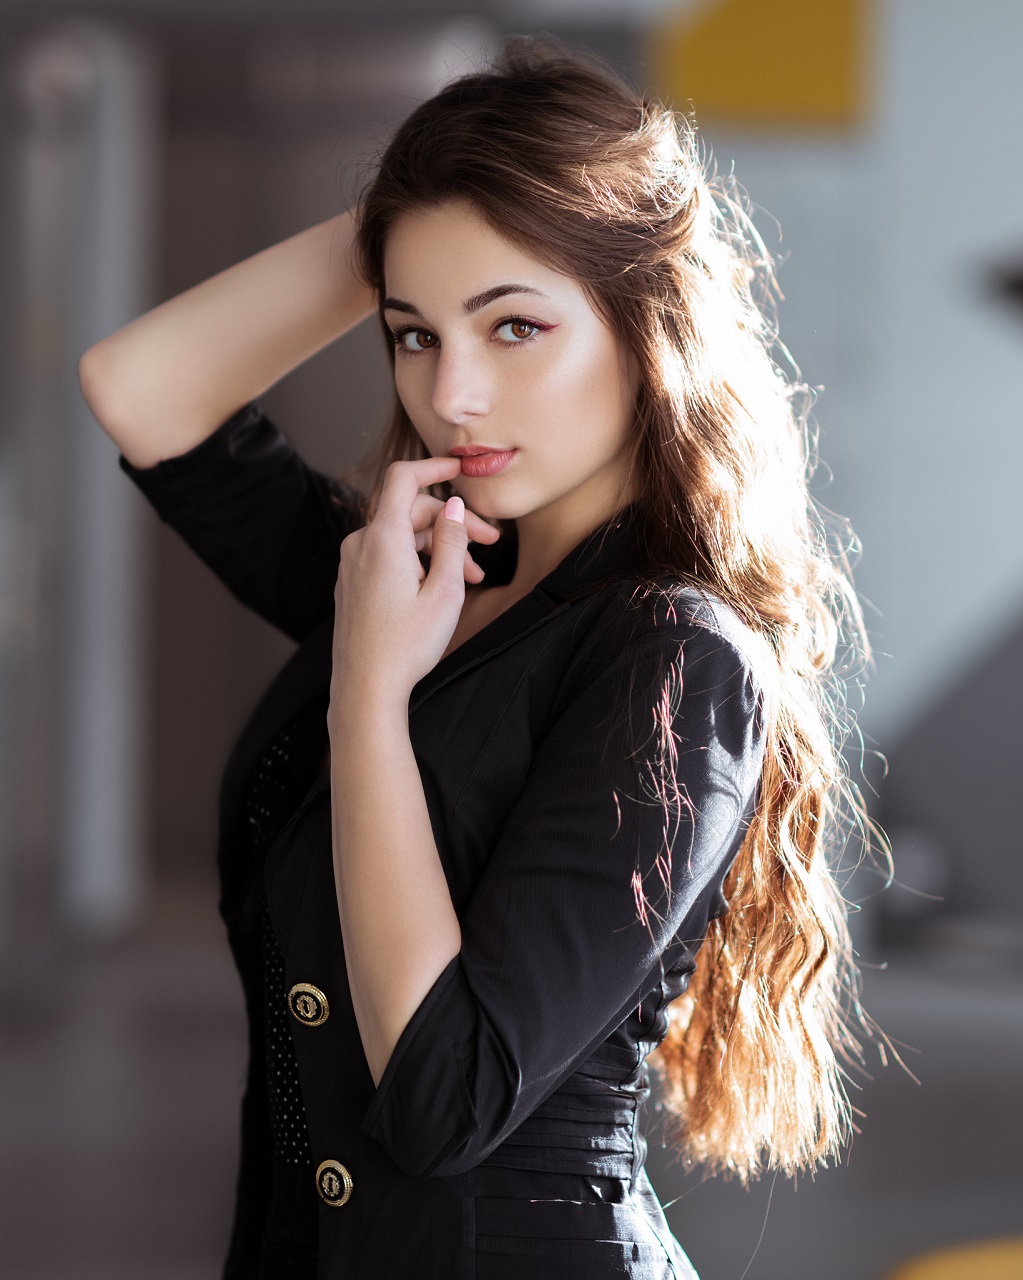 Marisha Khusnutdinova Model Women Finger On Lips 1023x1280